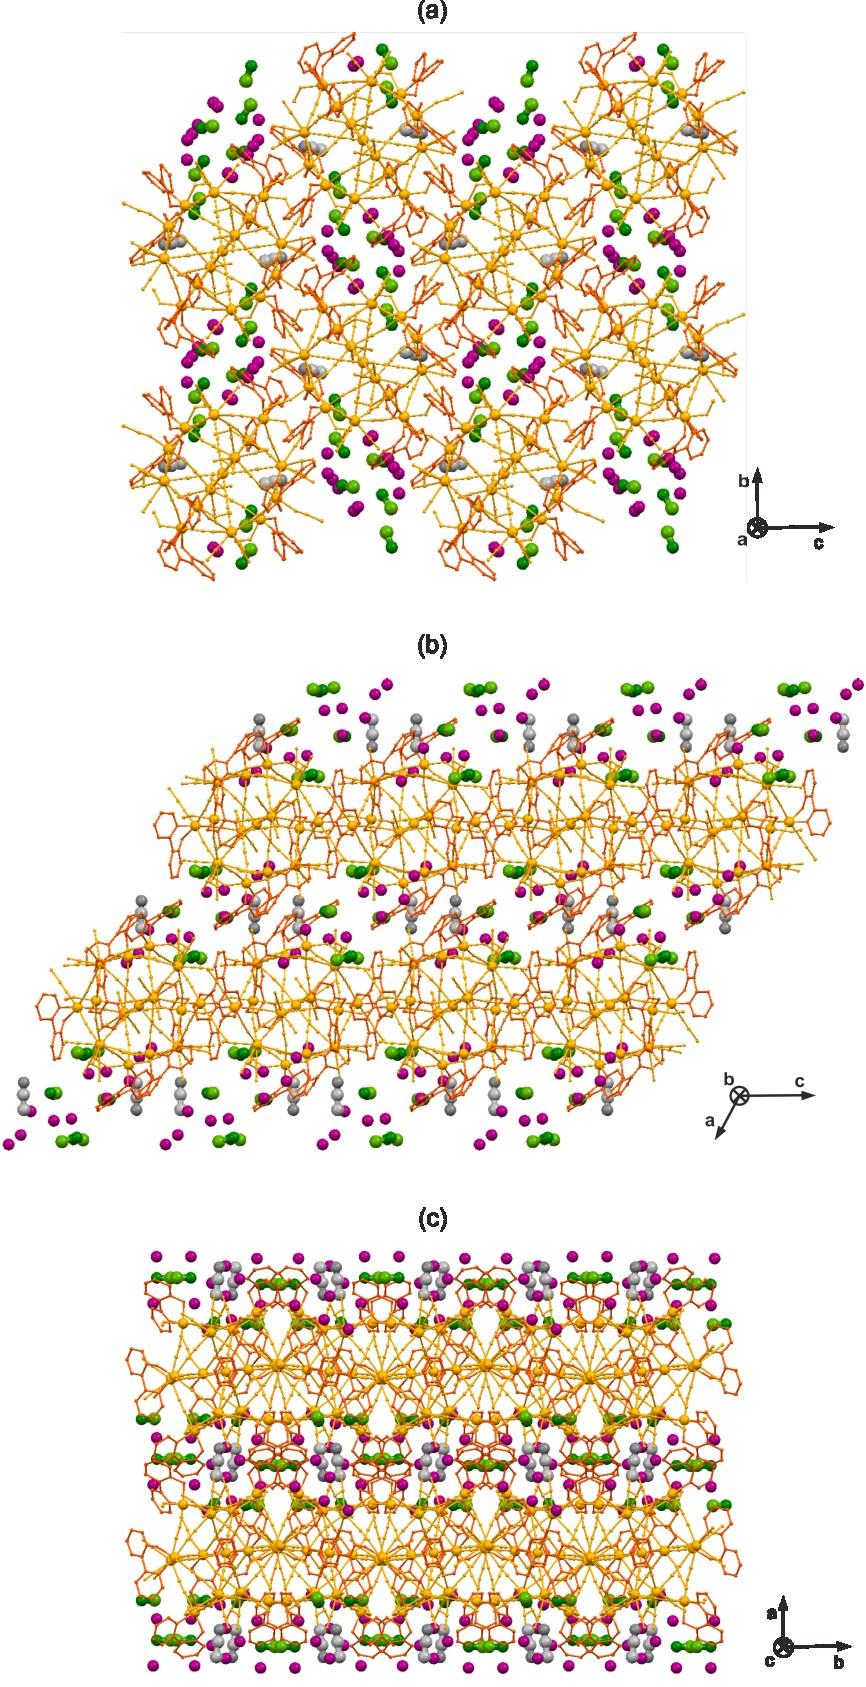 Figure S8 The supramolecular arrangement of cyanido-bridged clusters (orange) and